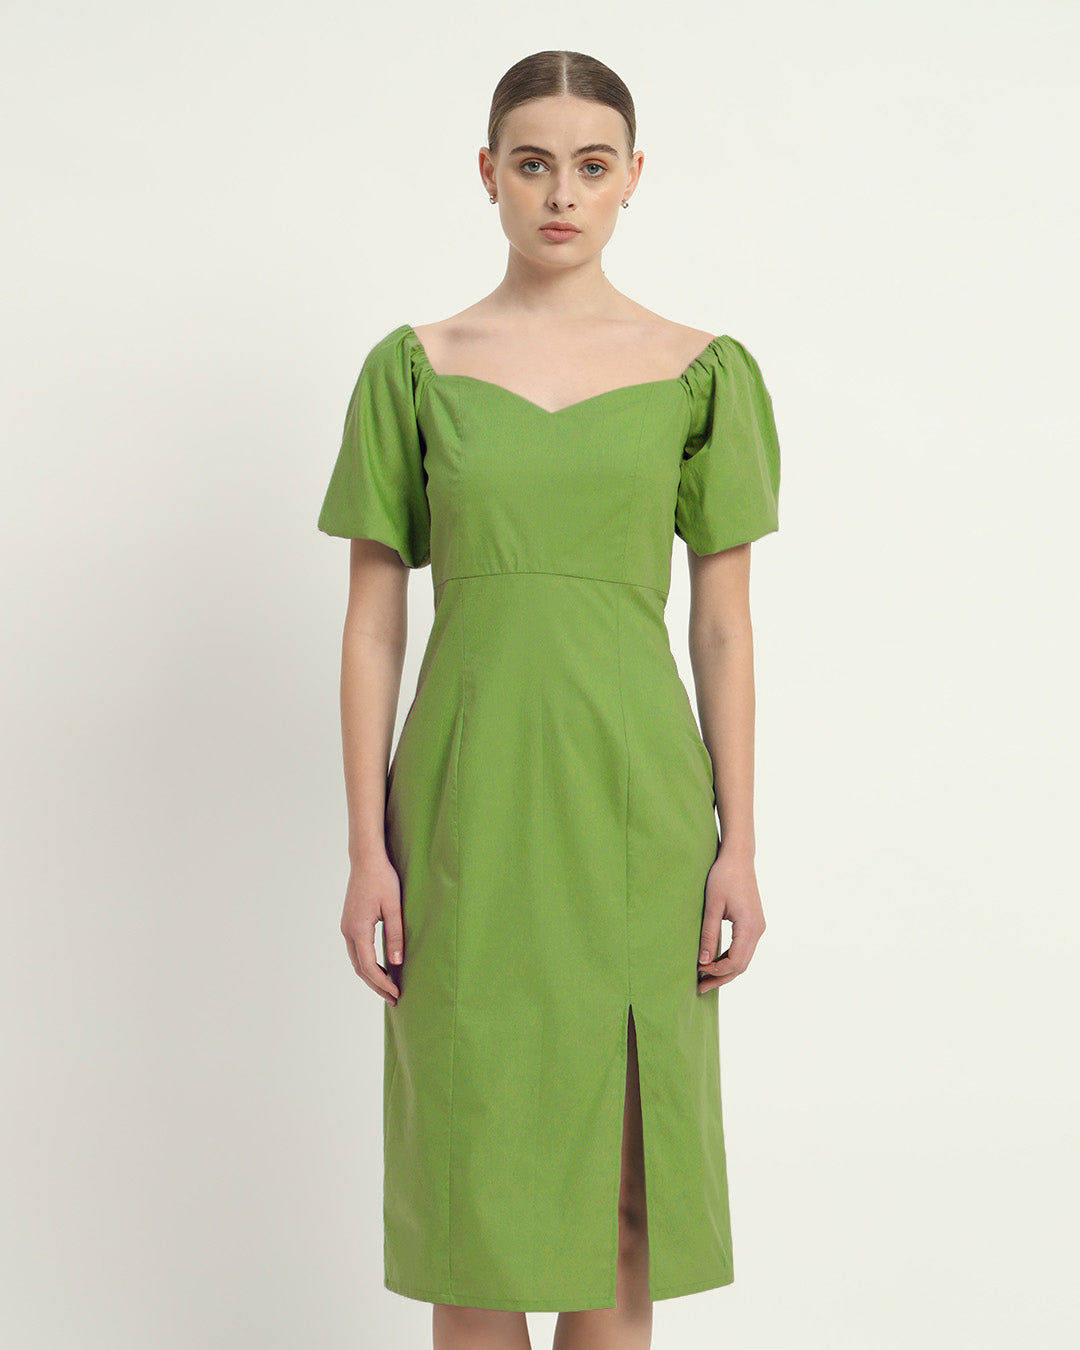 The Fern Erwin Cotton Dress